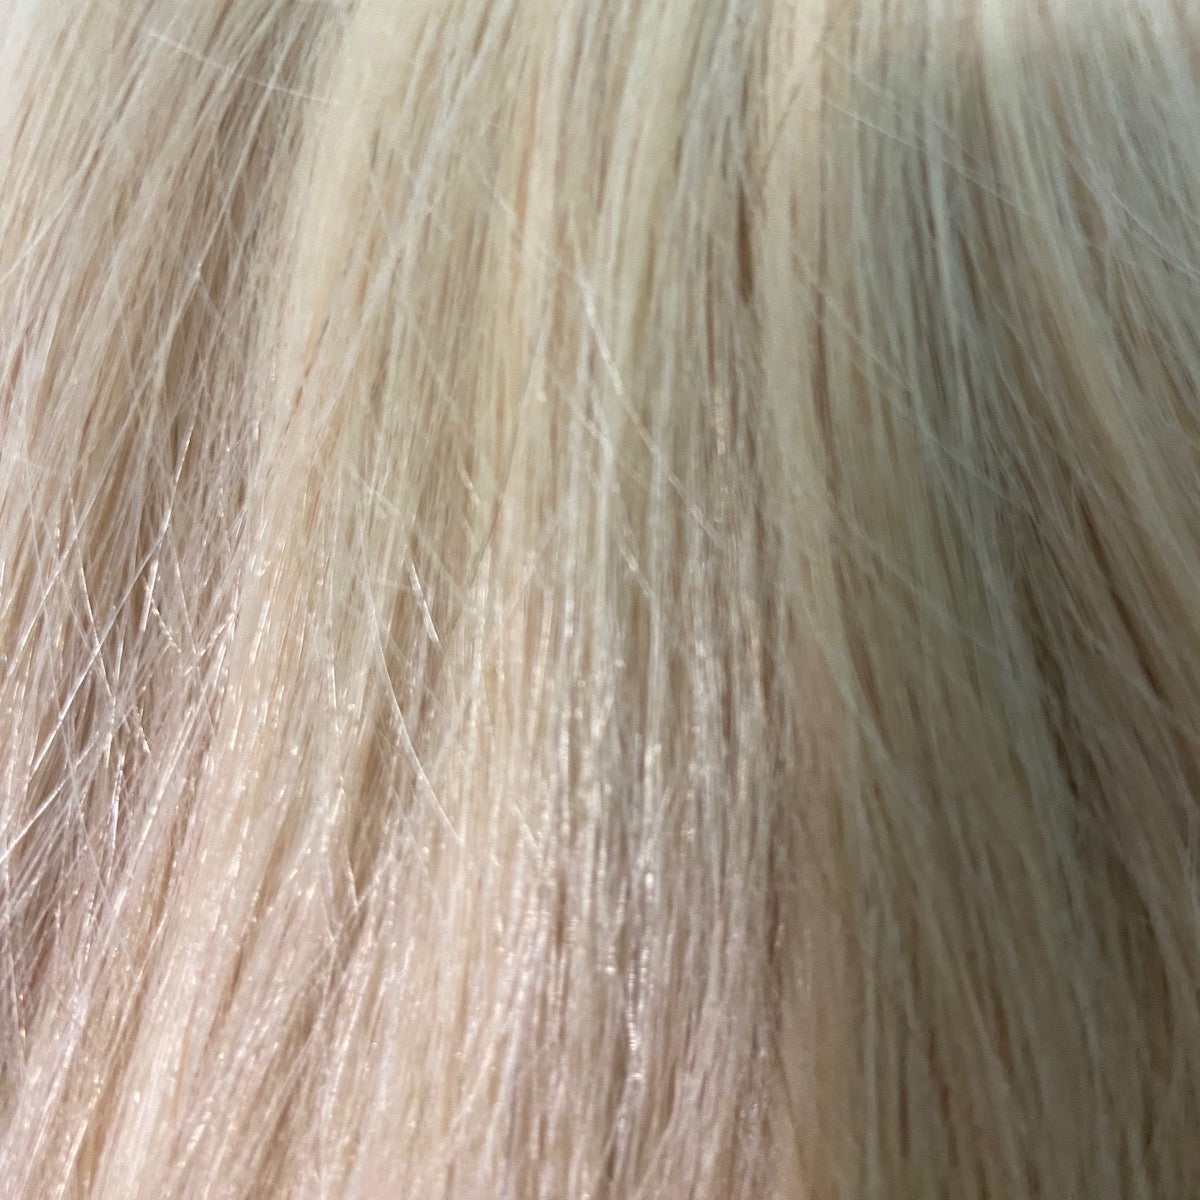 I-Tip 20" 25g Professional Hair Extensions - #19 Desert Blonde